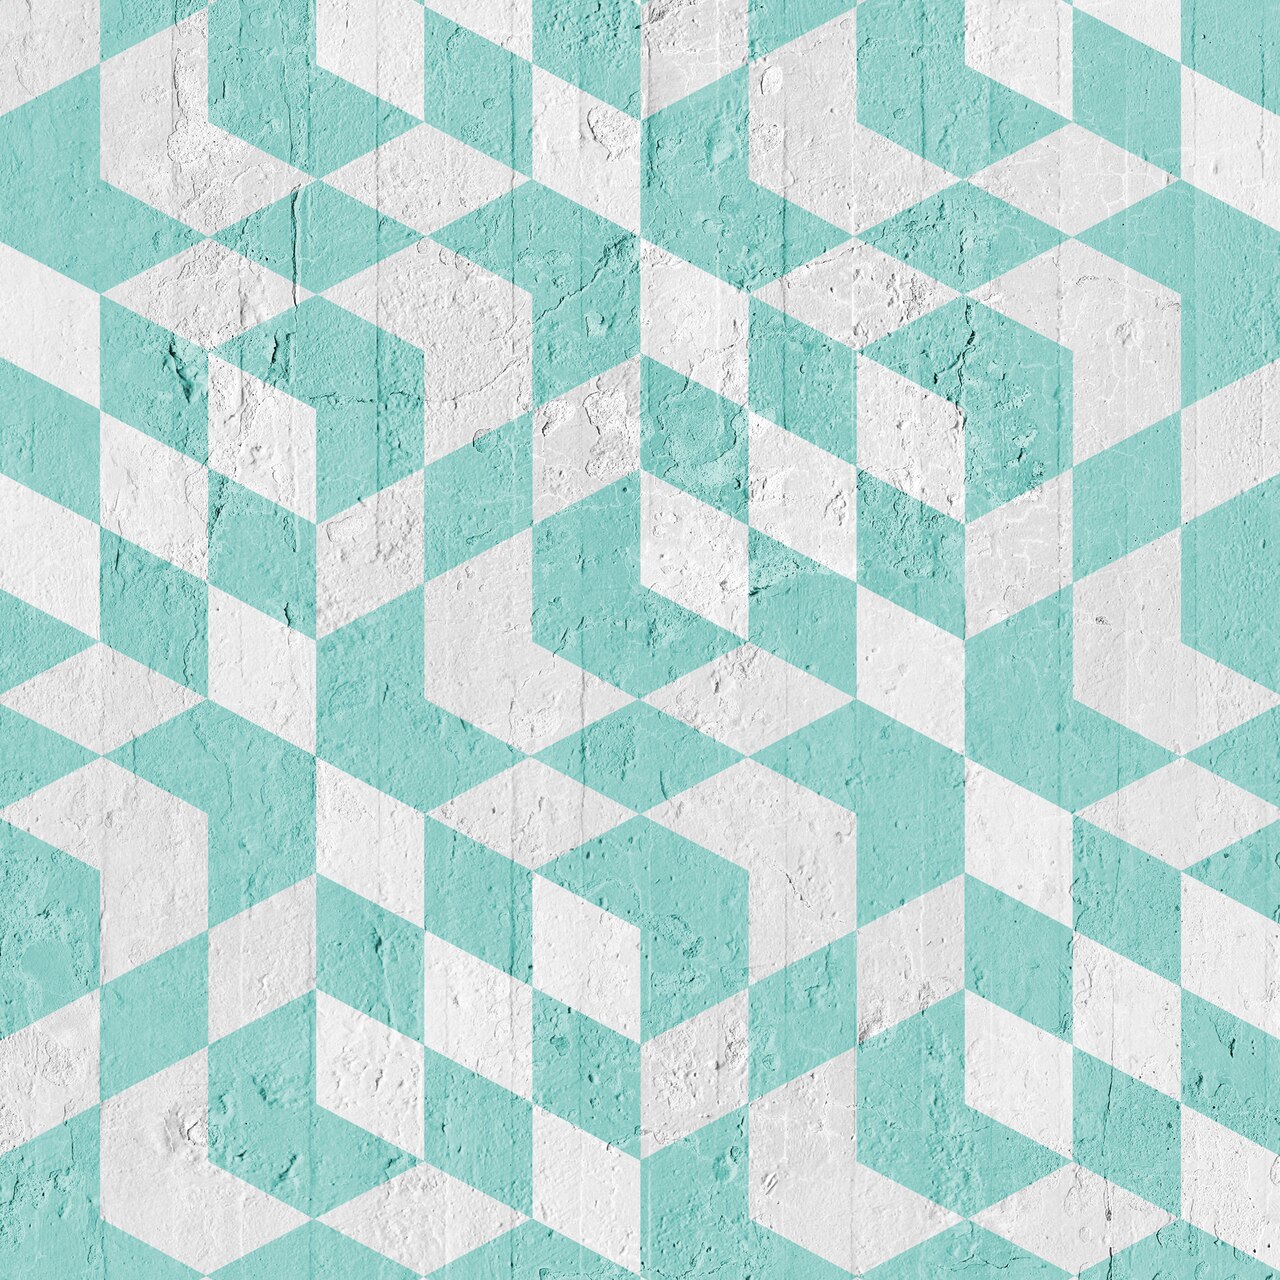 Geometric - HD Wallpaper 